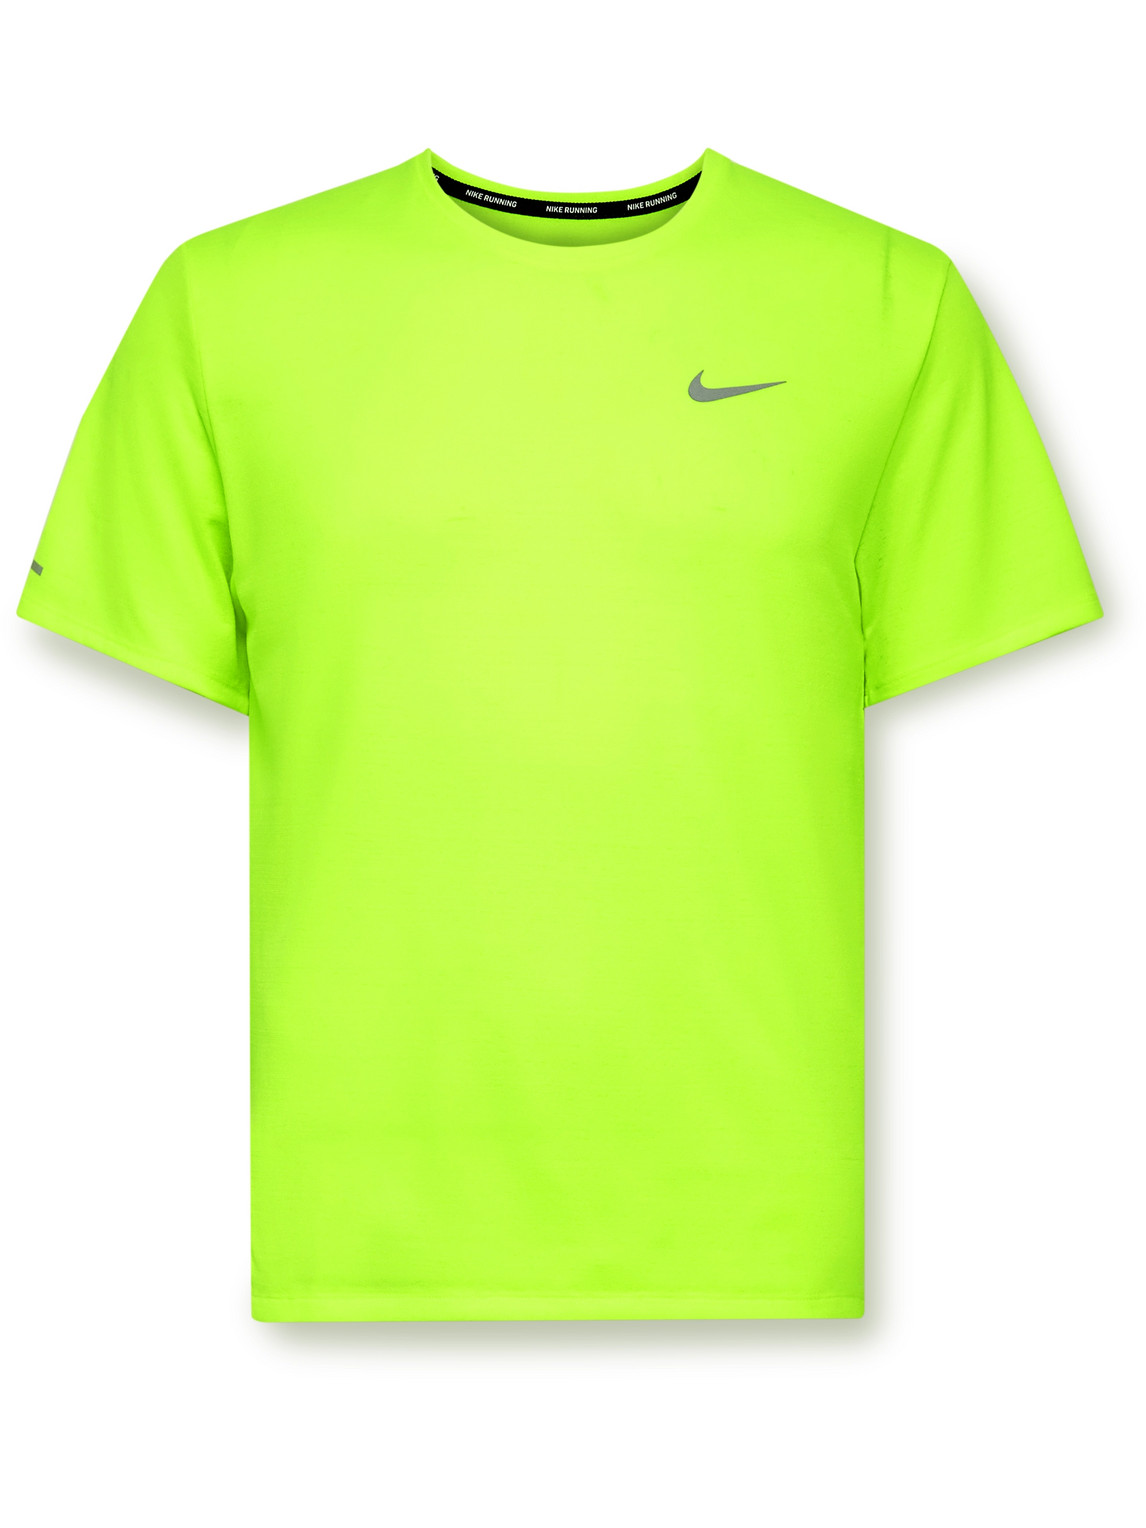 Nike Dri-fit Running T-shirt In Yellow